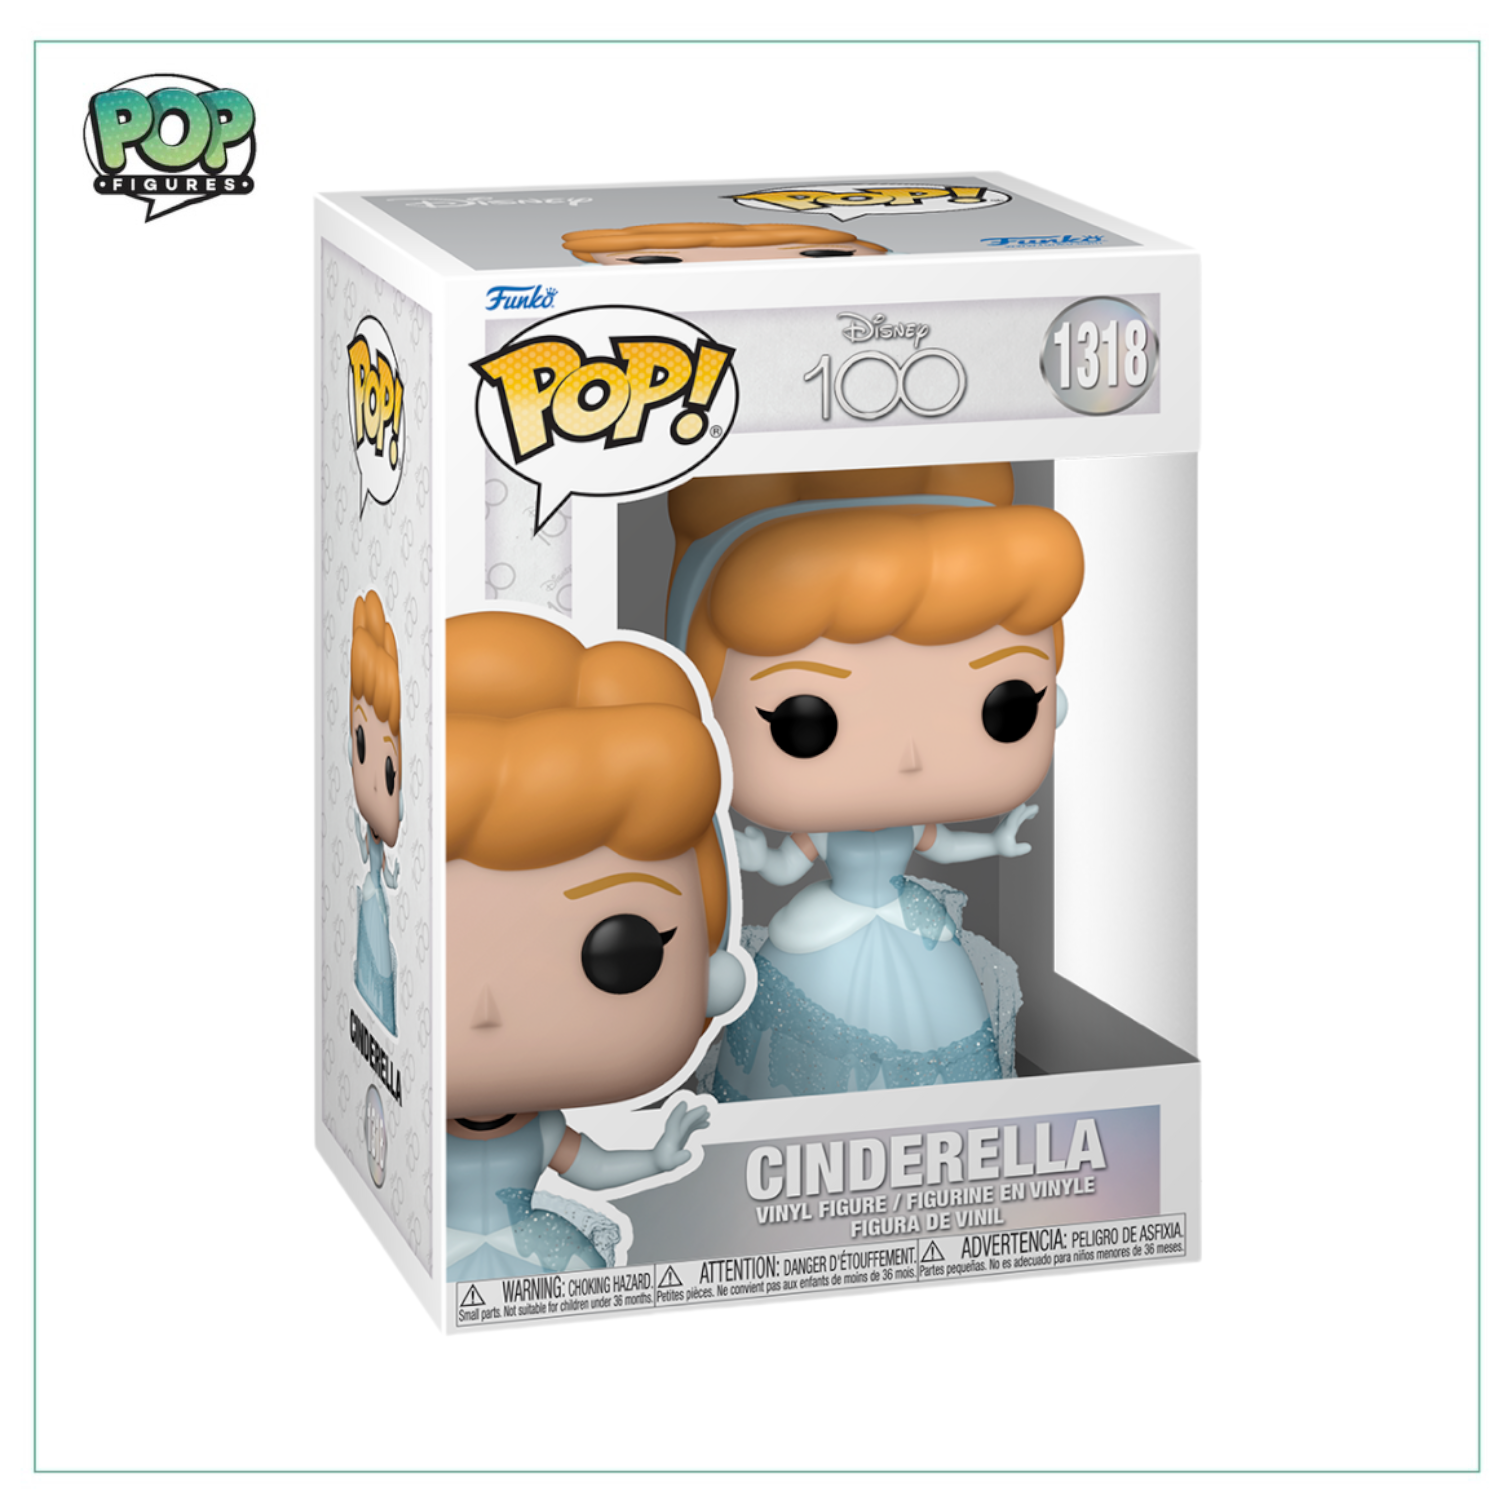 Cinderella #1318 Funko Pop! Disney 100th